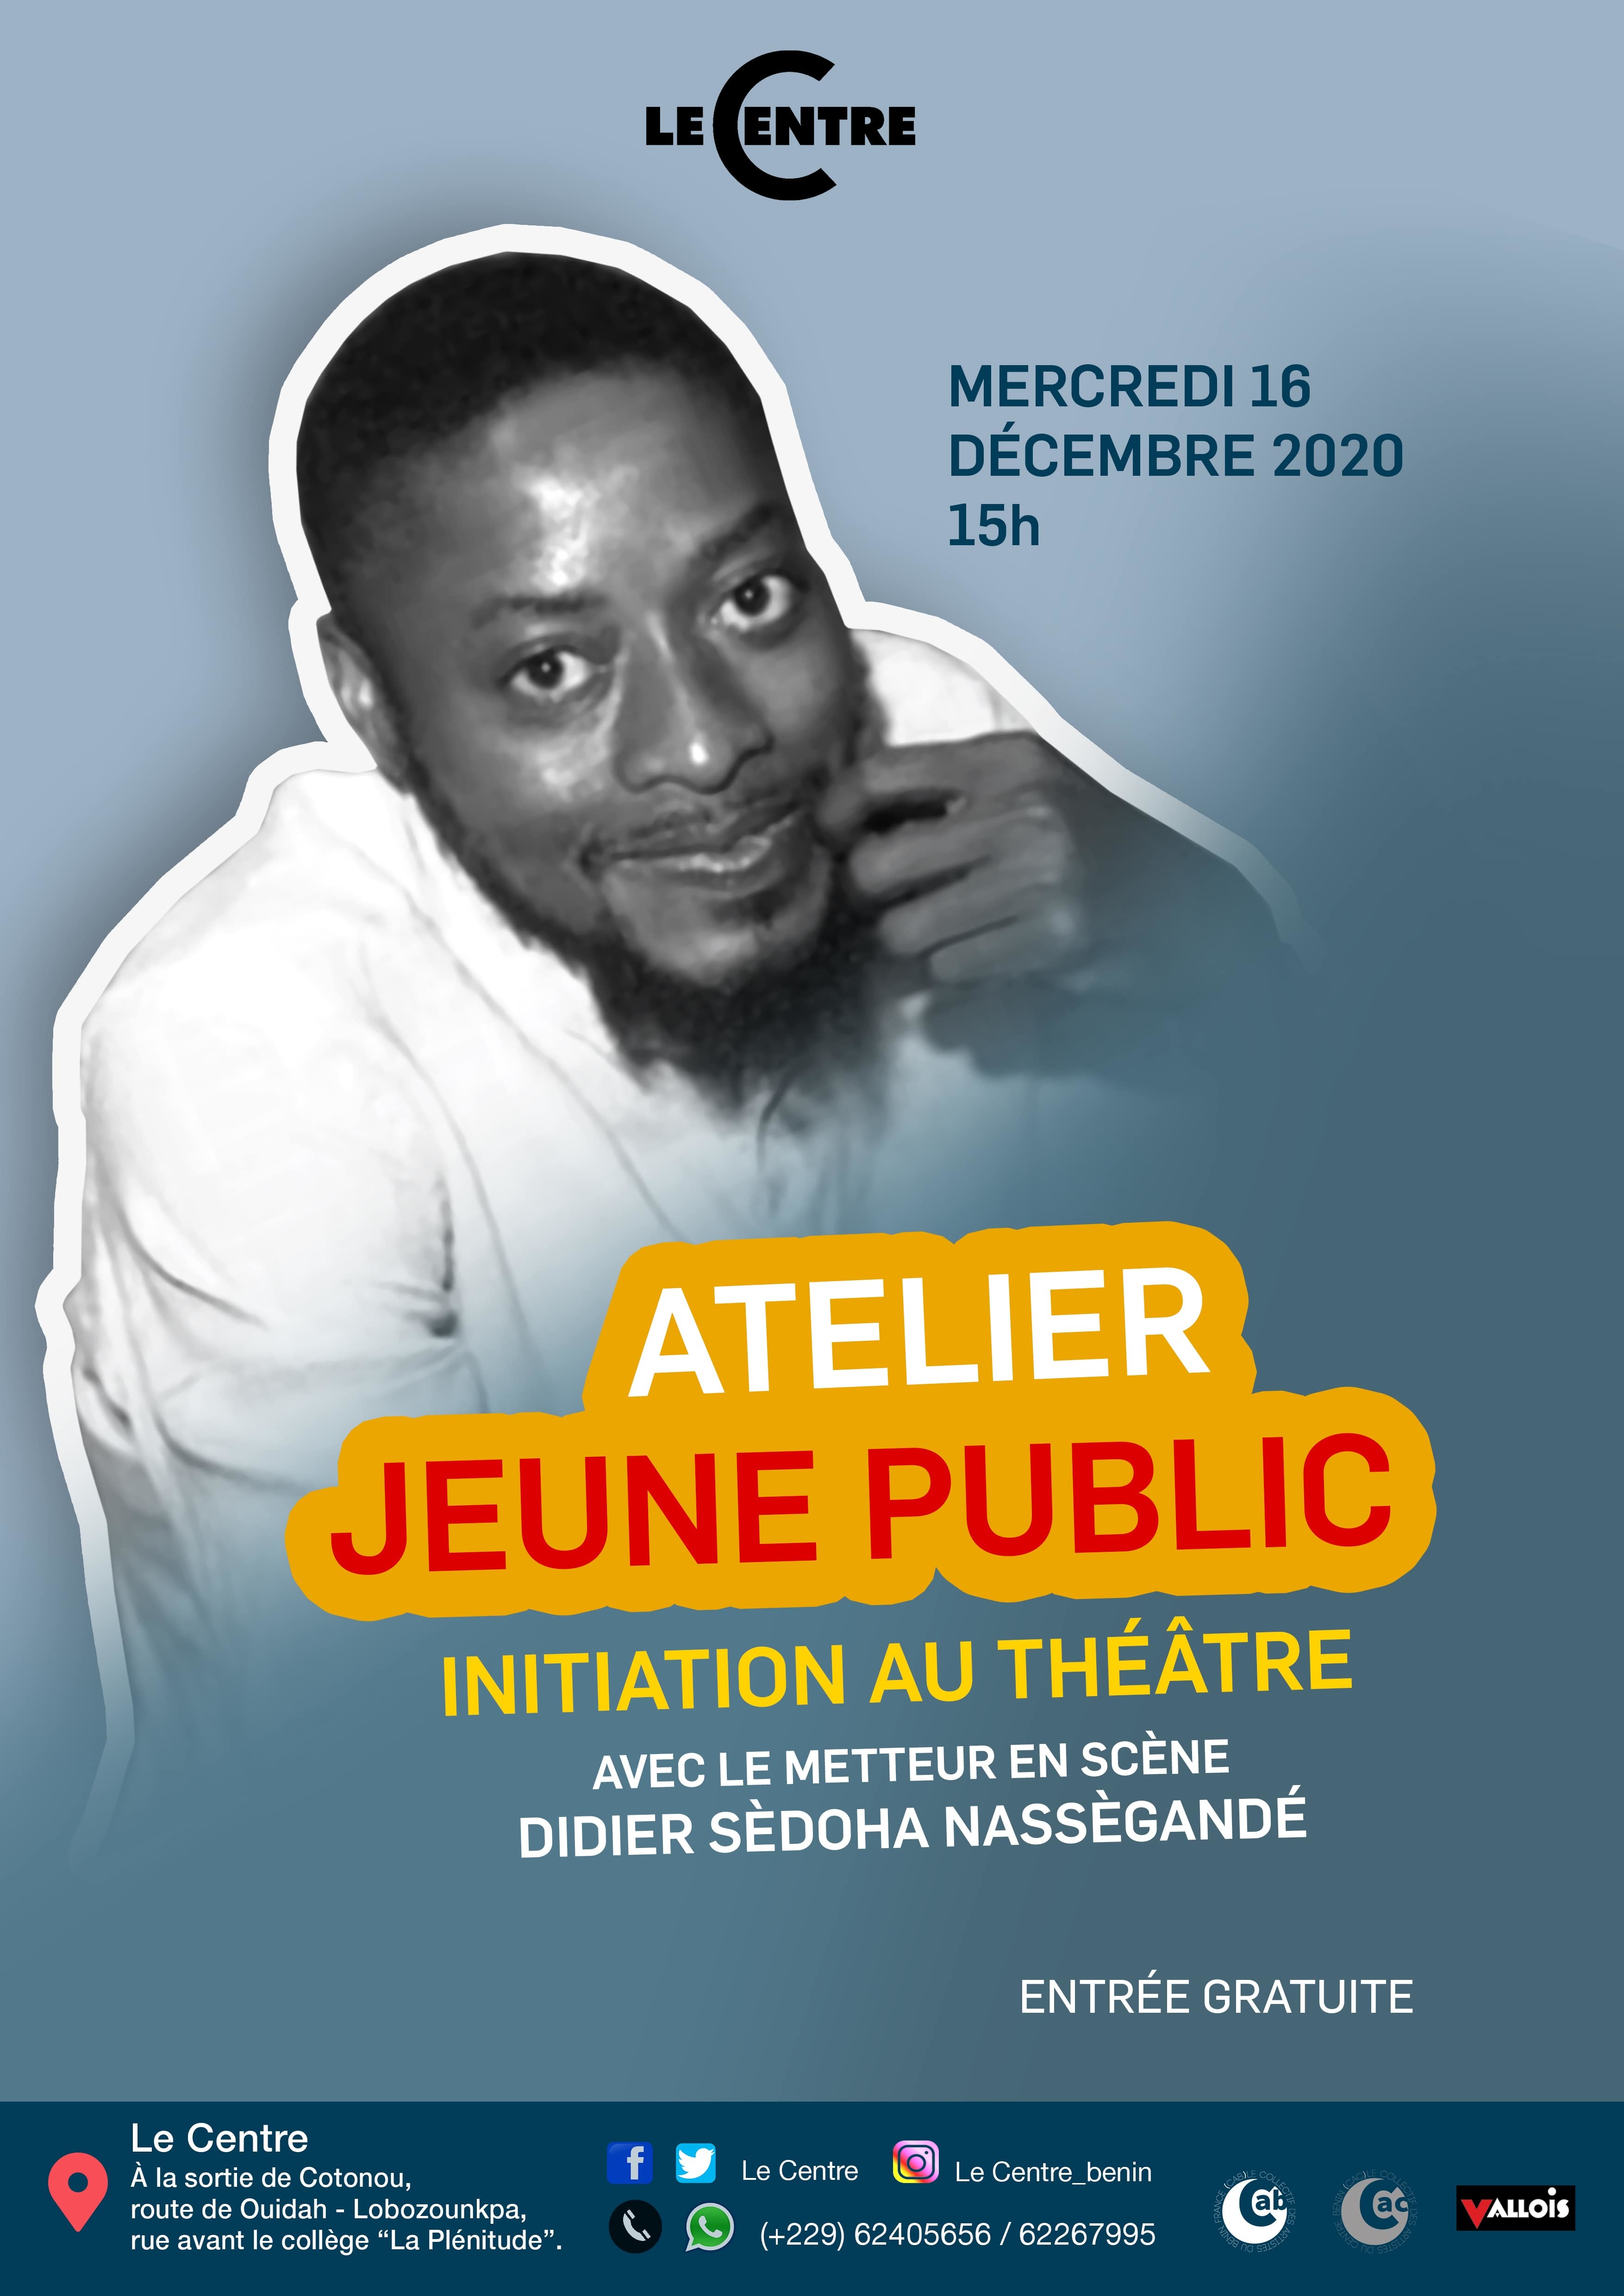 Didier Sèdoha Nassègandé